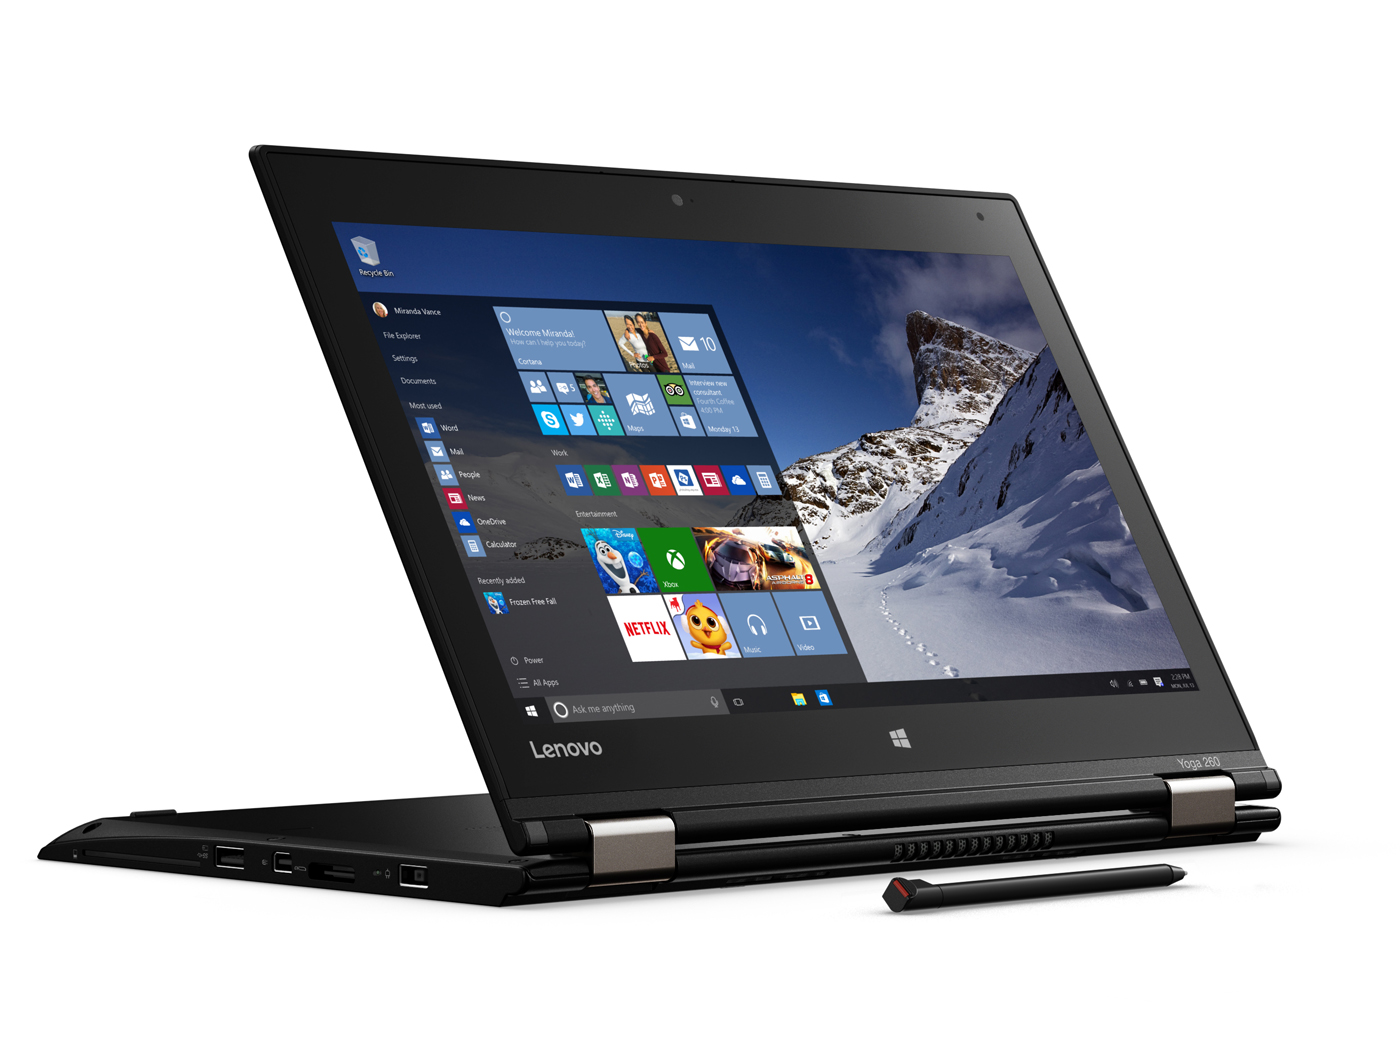 Upcoming Lenovo ThinkPad to feature super-fast hybrid storage, zero-bloatware Windows 10.